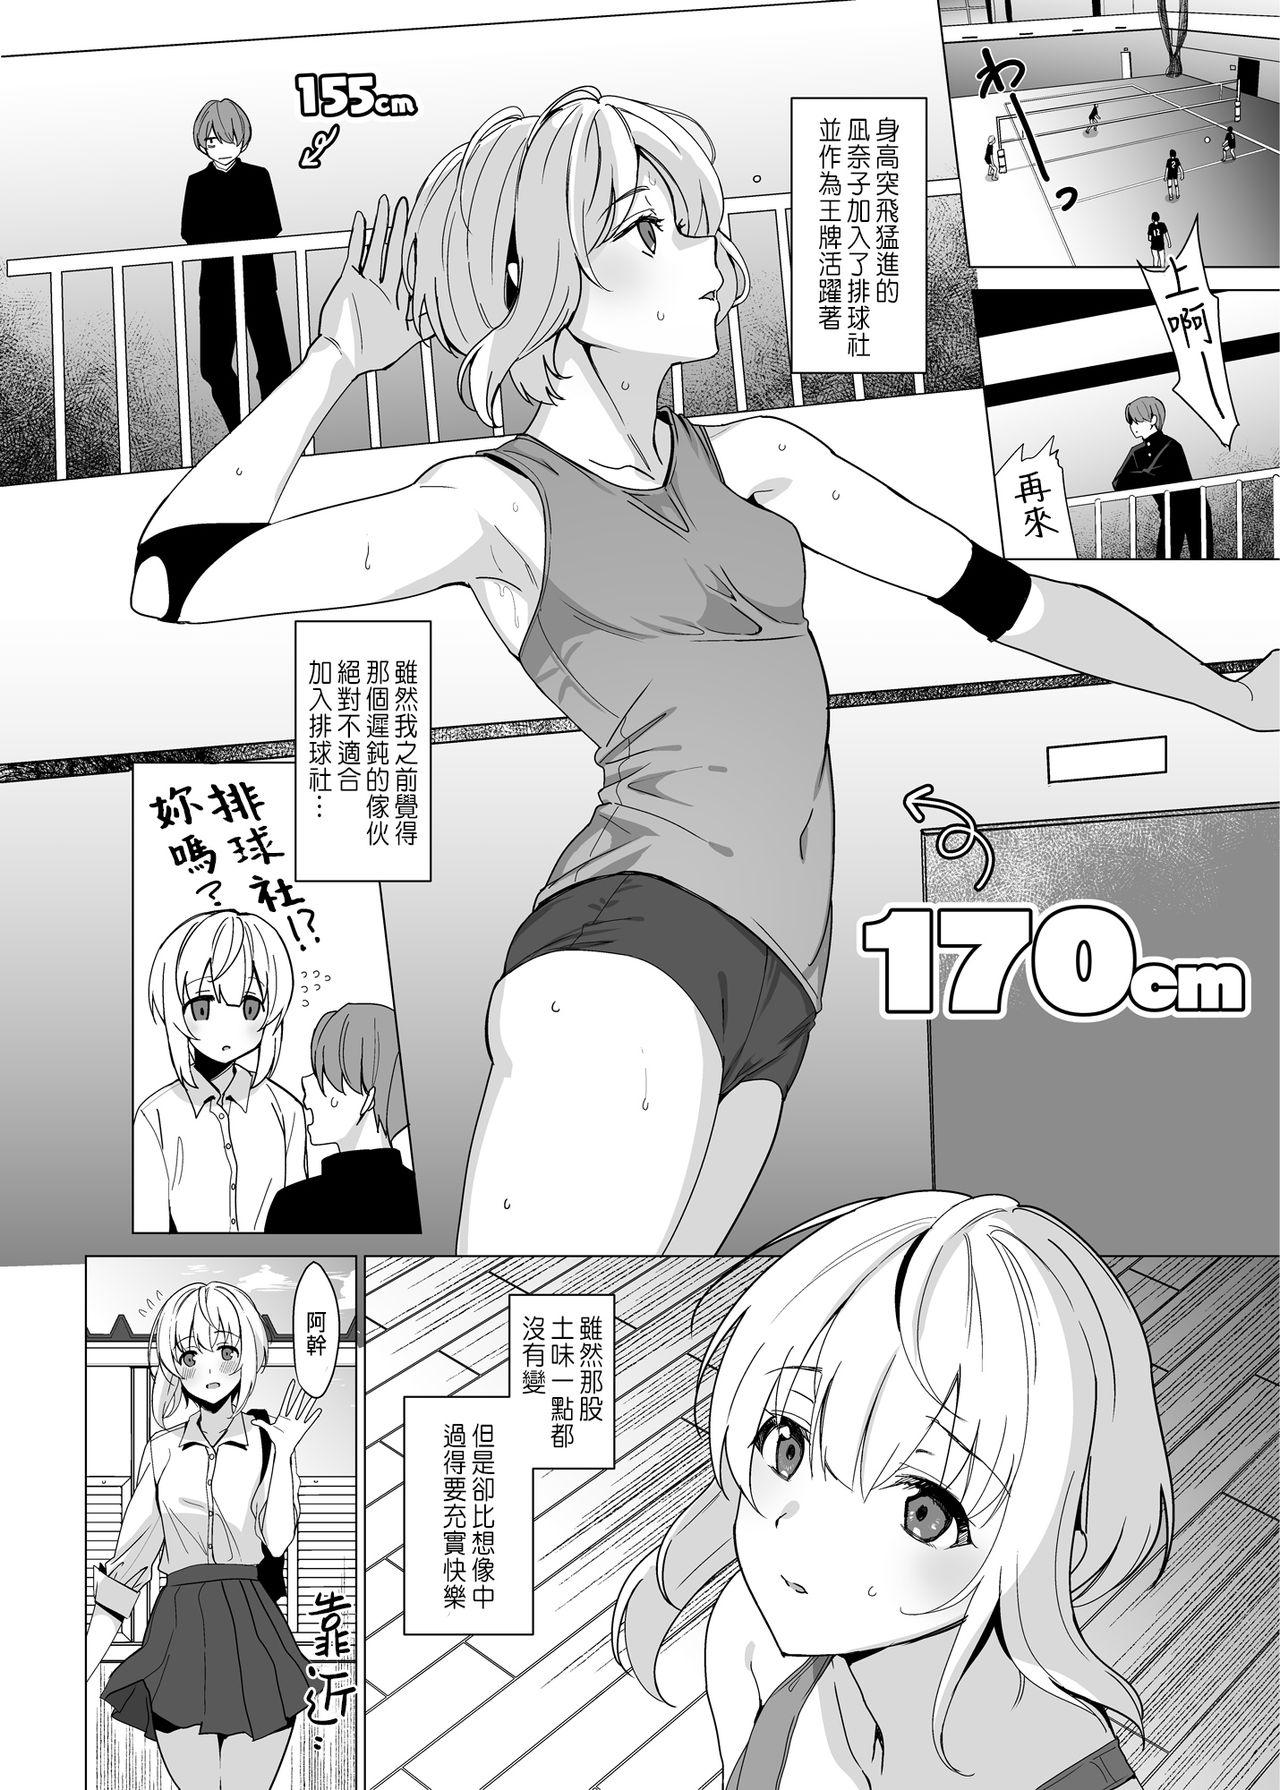 Workout Nekoze no Kimi e - Original Ex Girlfriend - Page 4